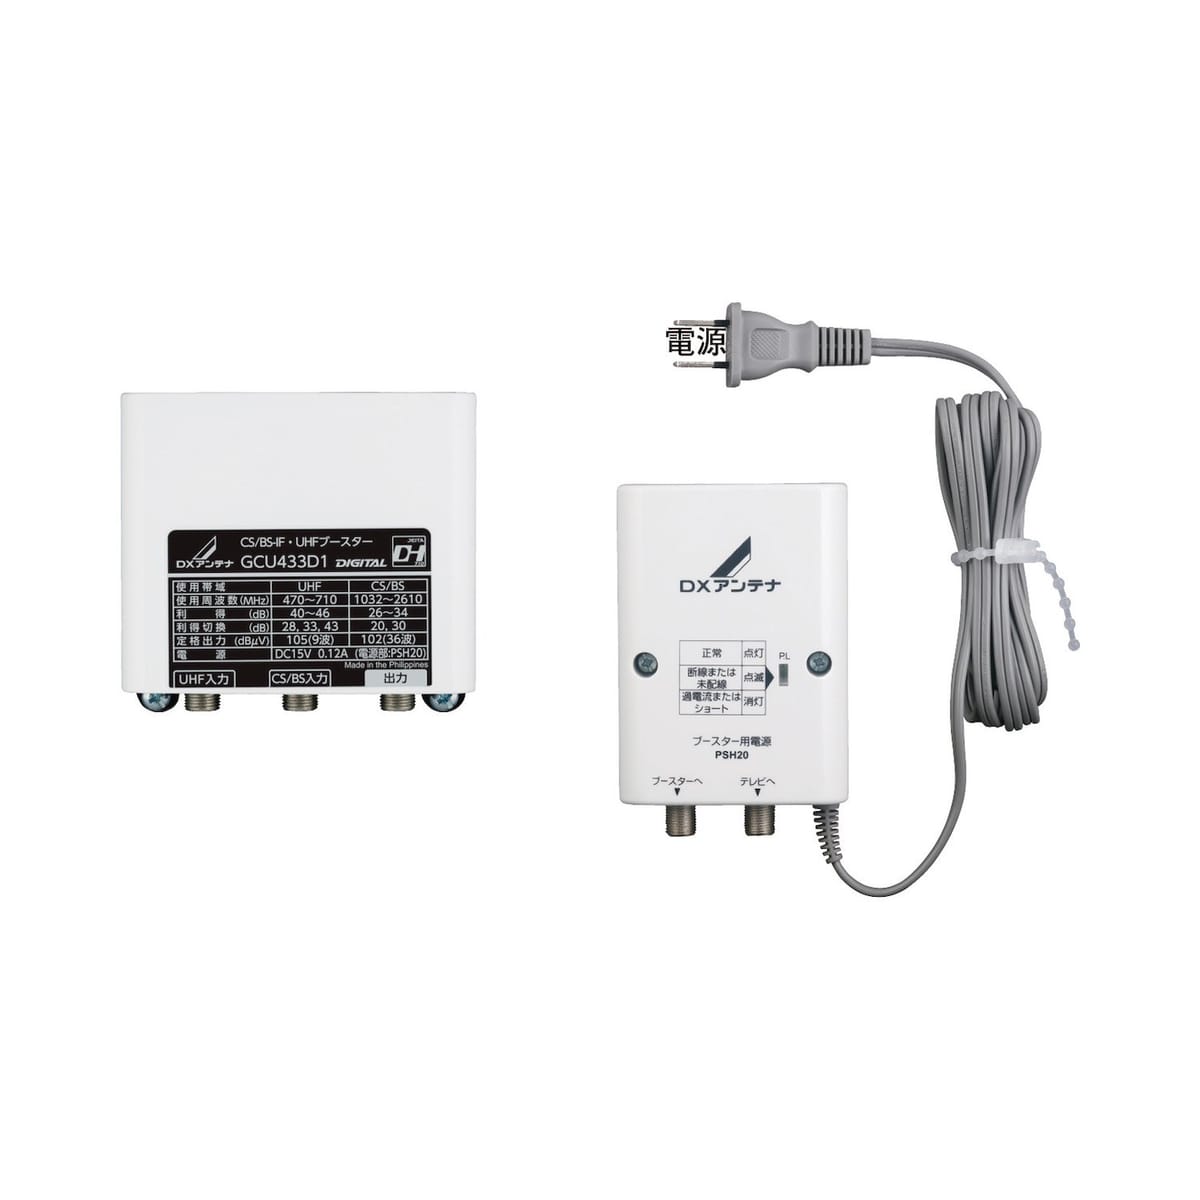 DXアンテナ CS/BS-IF・UHF デュアルブースター 家庭用 水平マストに取付可能 GCU433D1